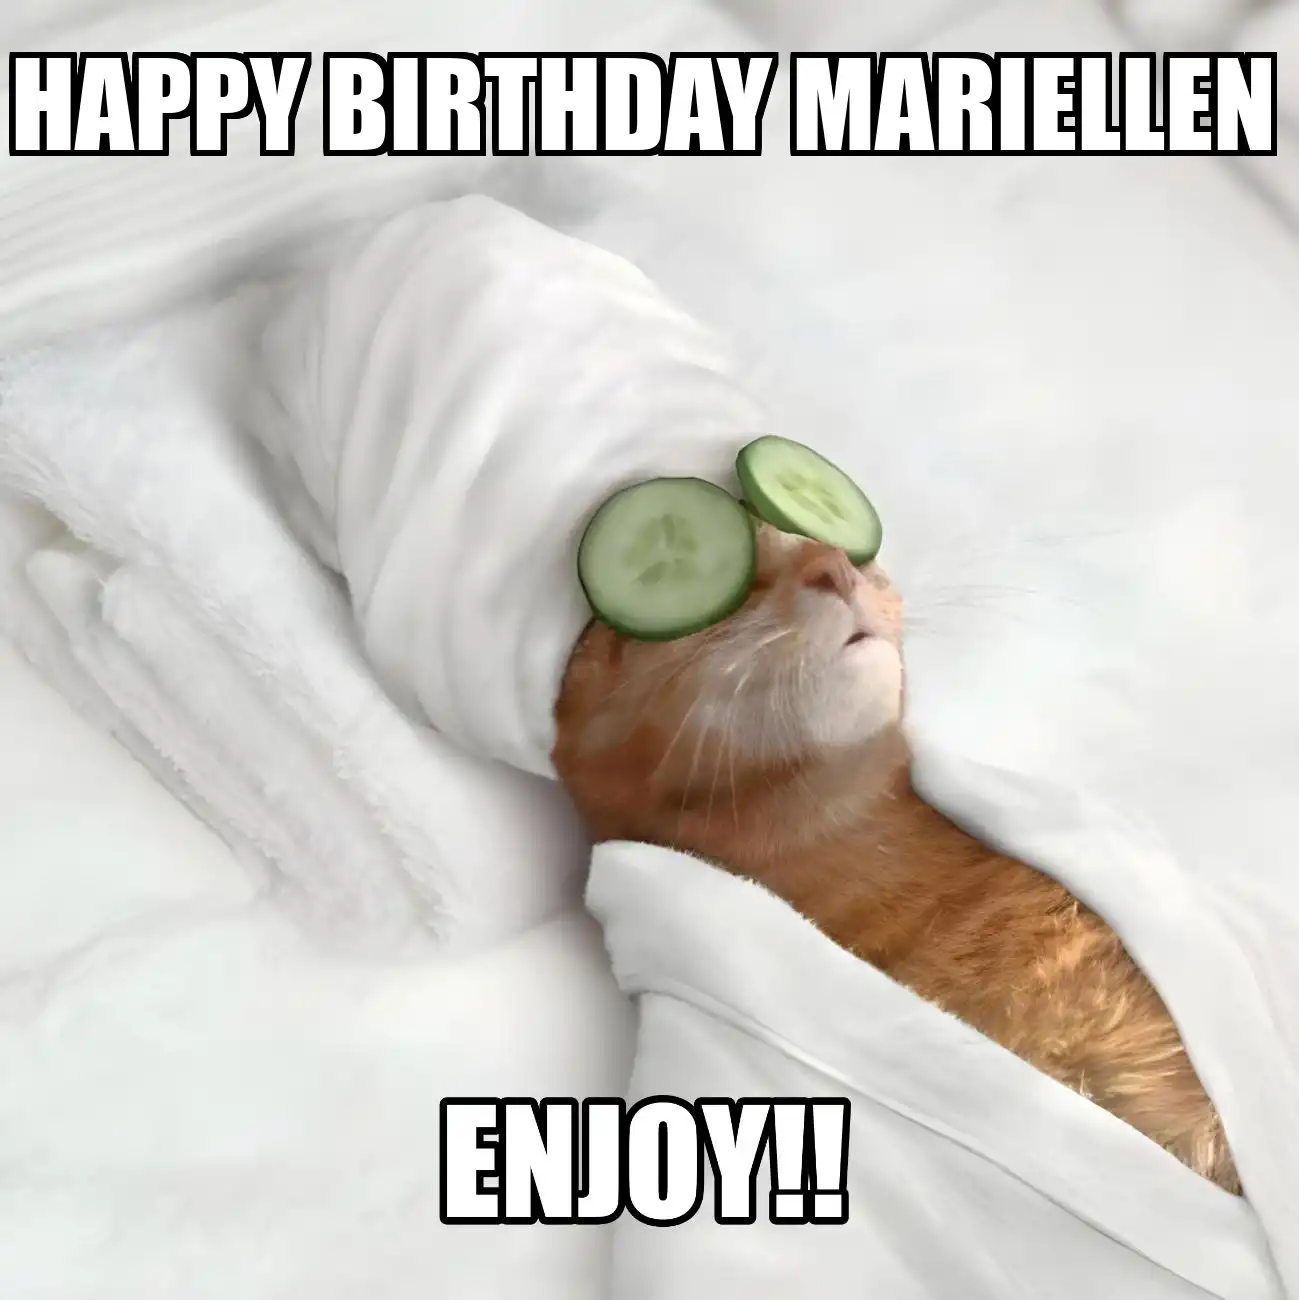 Happy Birthday Mariellen Enjoy Cat Meme